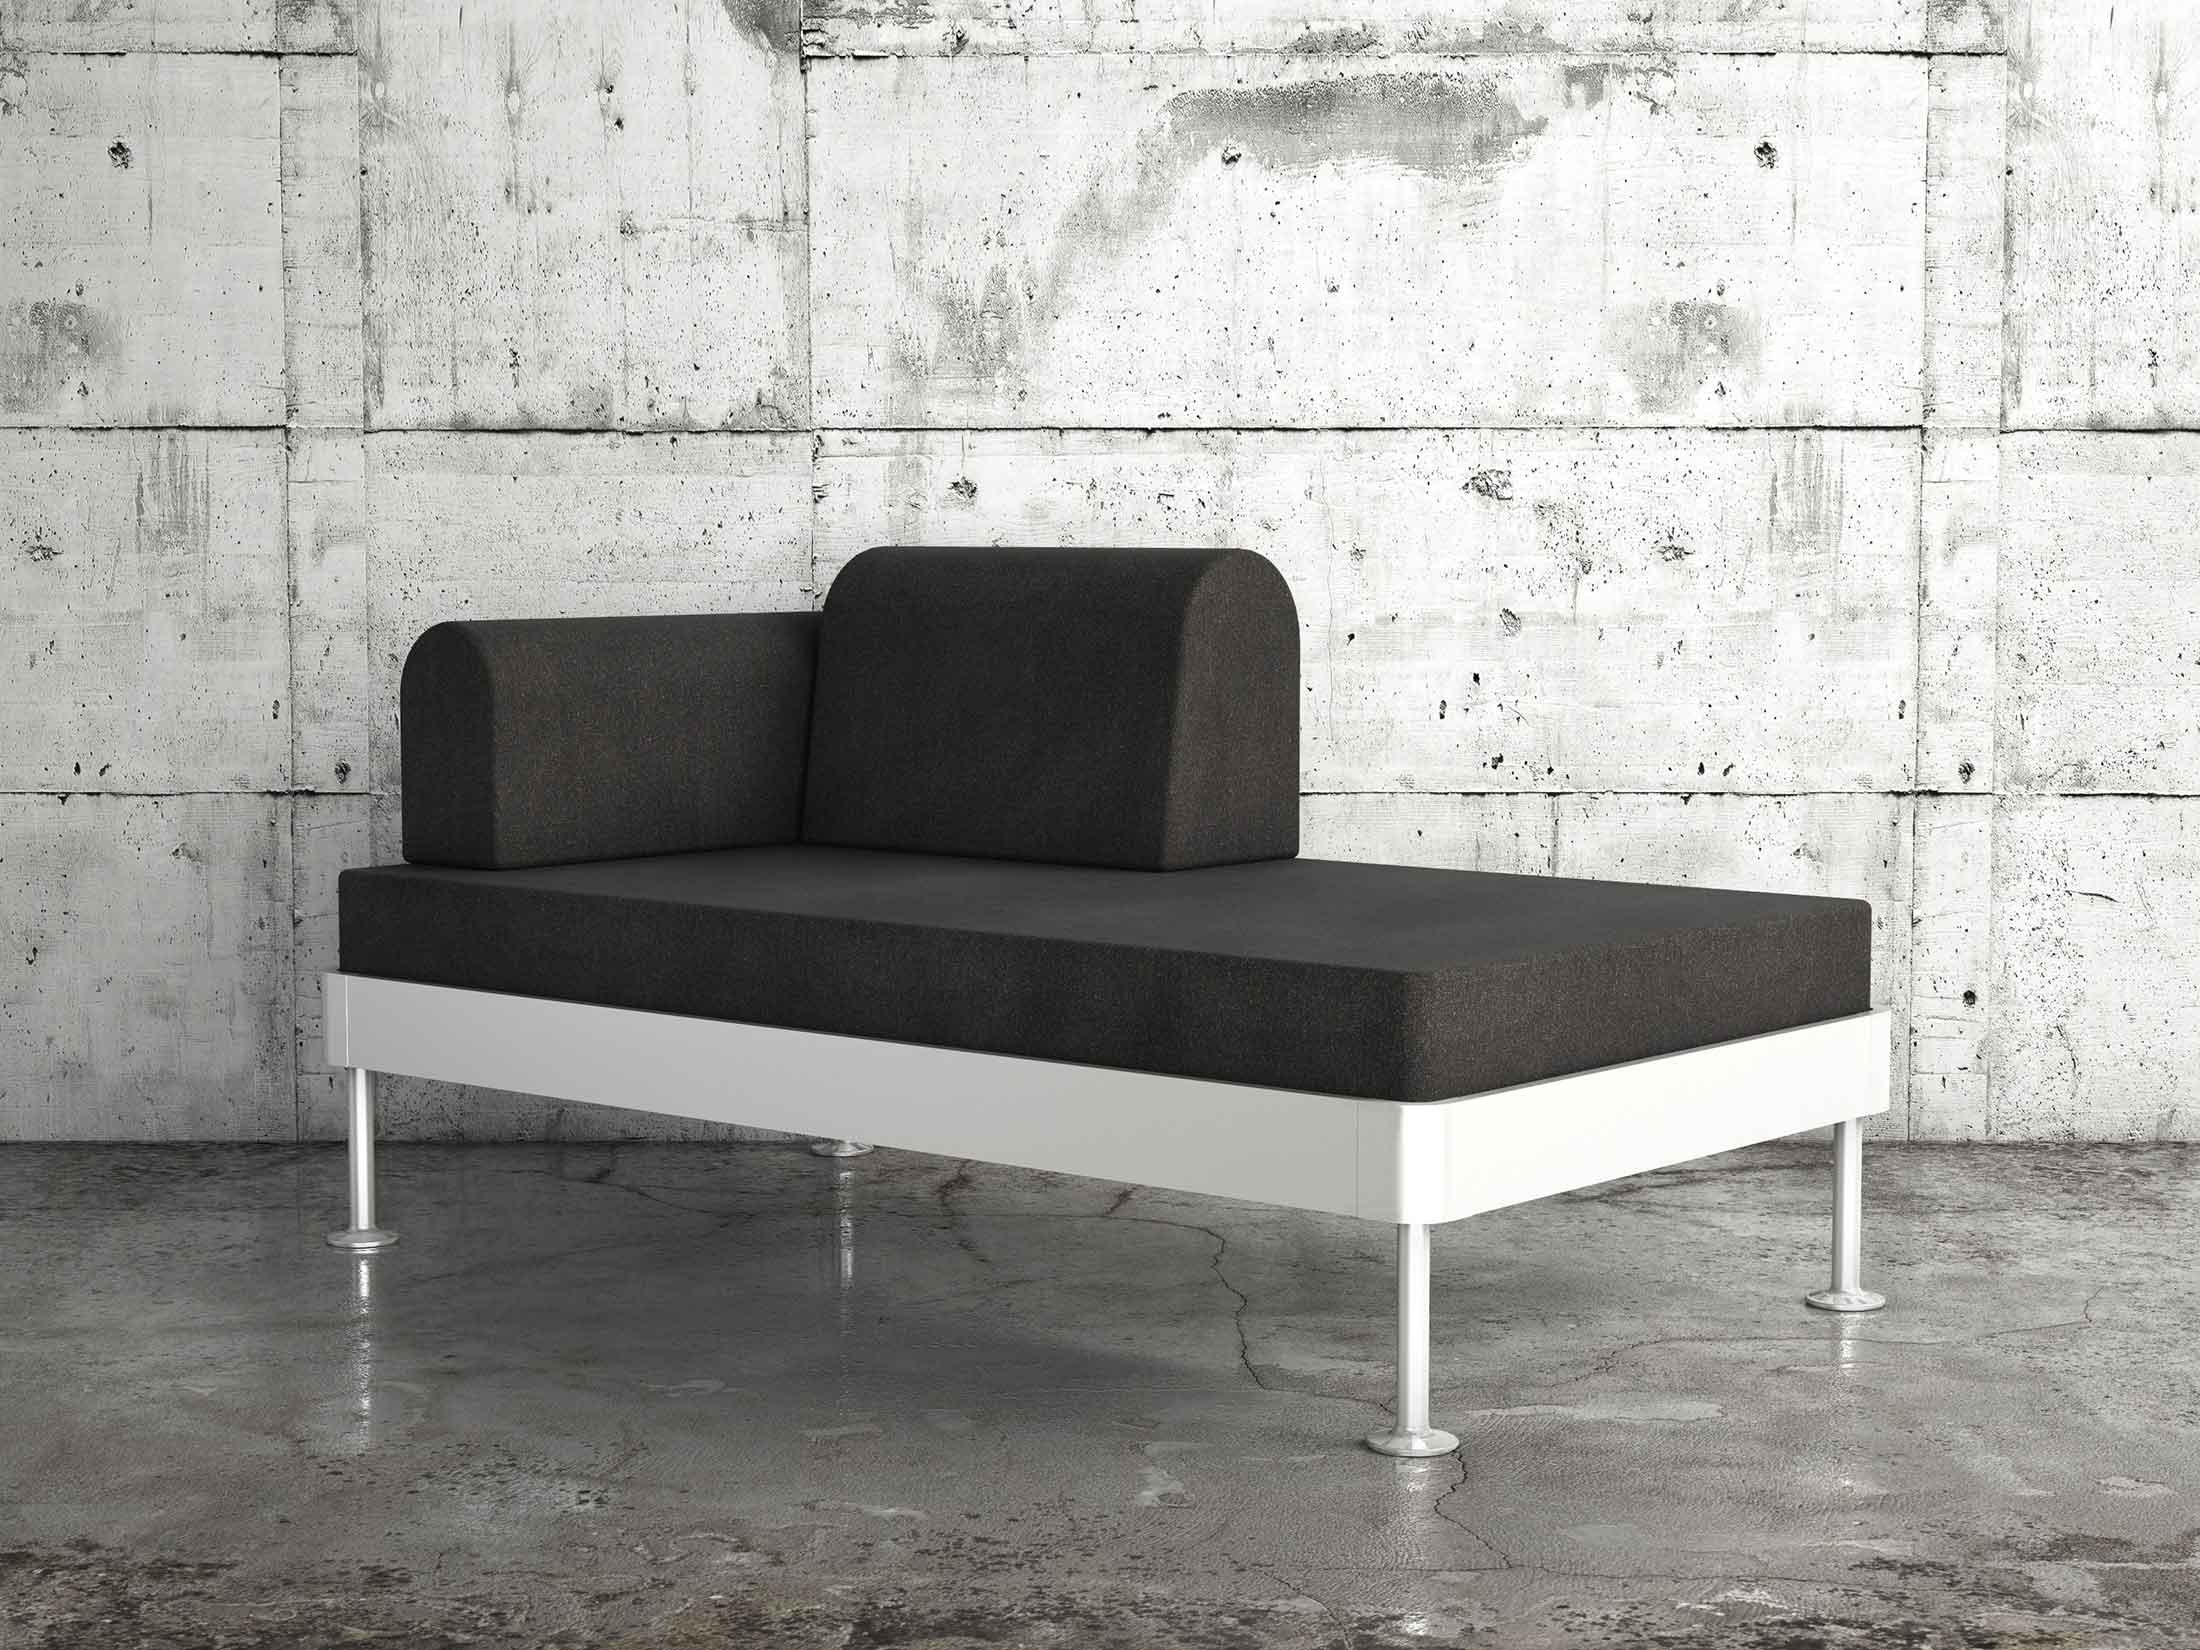 Tom Dixon's 'Open Source' Ikea Delaktig Sofa Wants to Be Hacked - Bloomberg